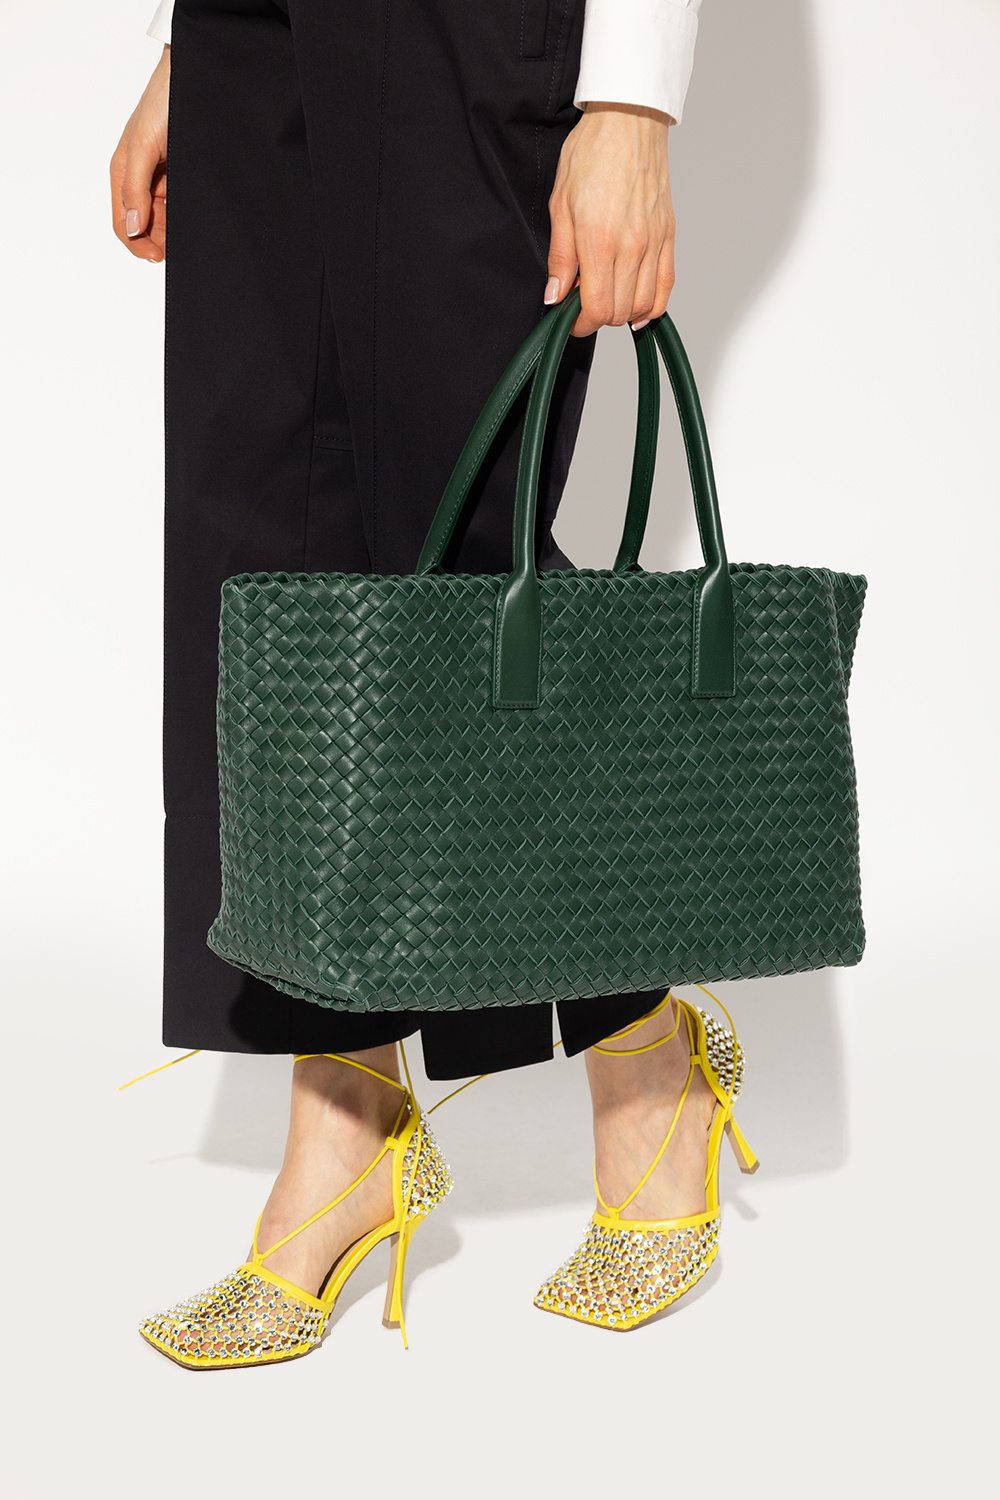 Bottega Veneta 'Cabat Large’ shopper bag